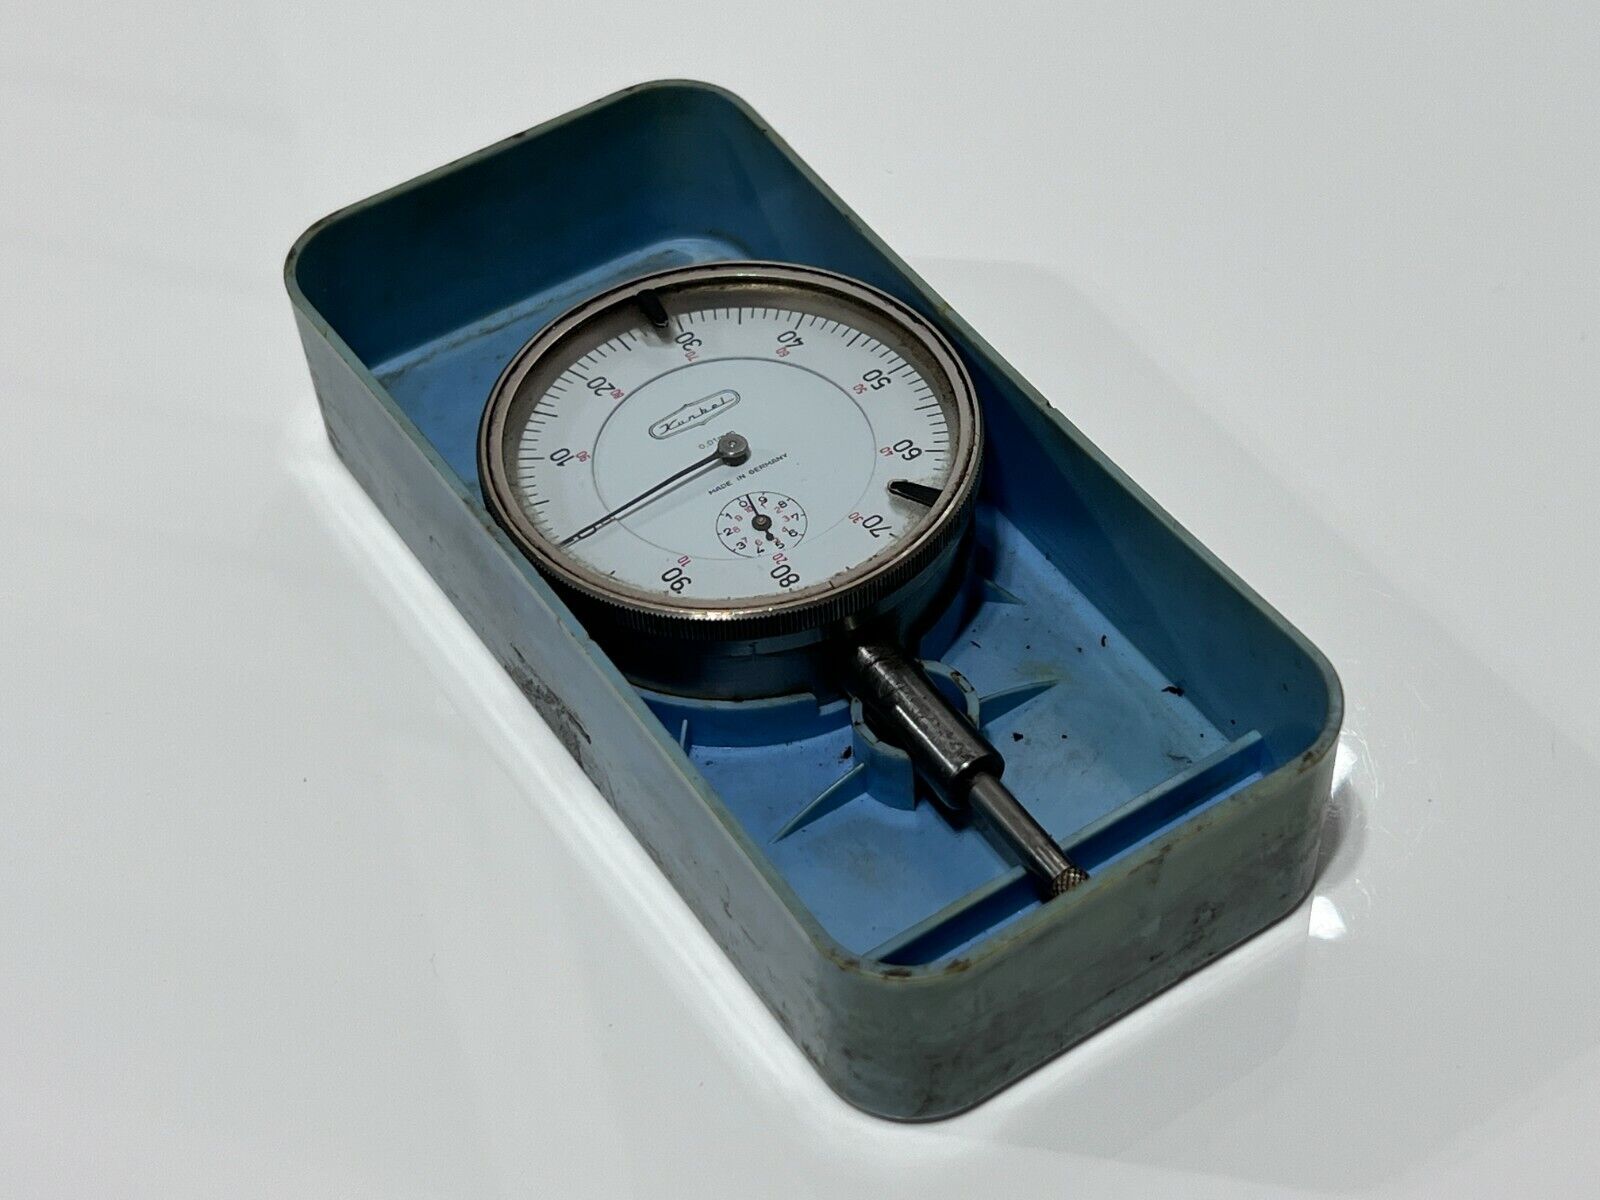 Kunkel Germany Vintage Dial Indicator - 0.01MM - Original Carrying Case - Rare